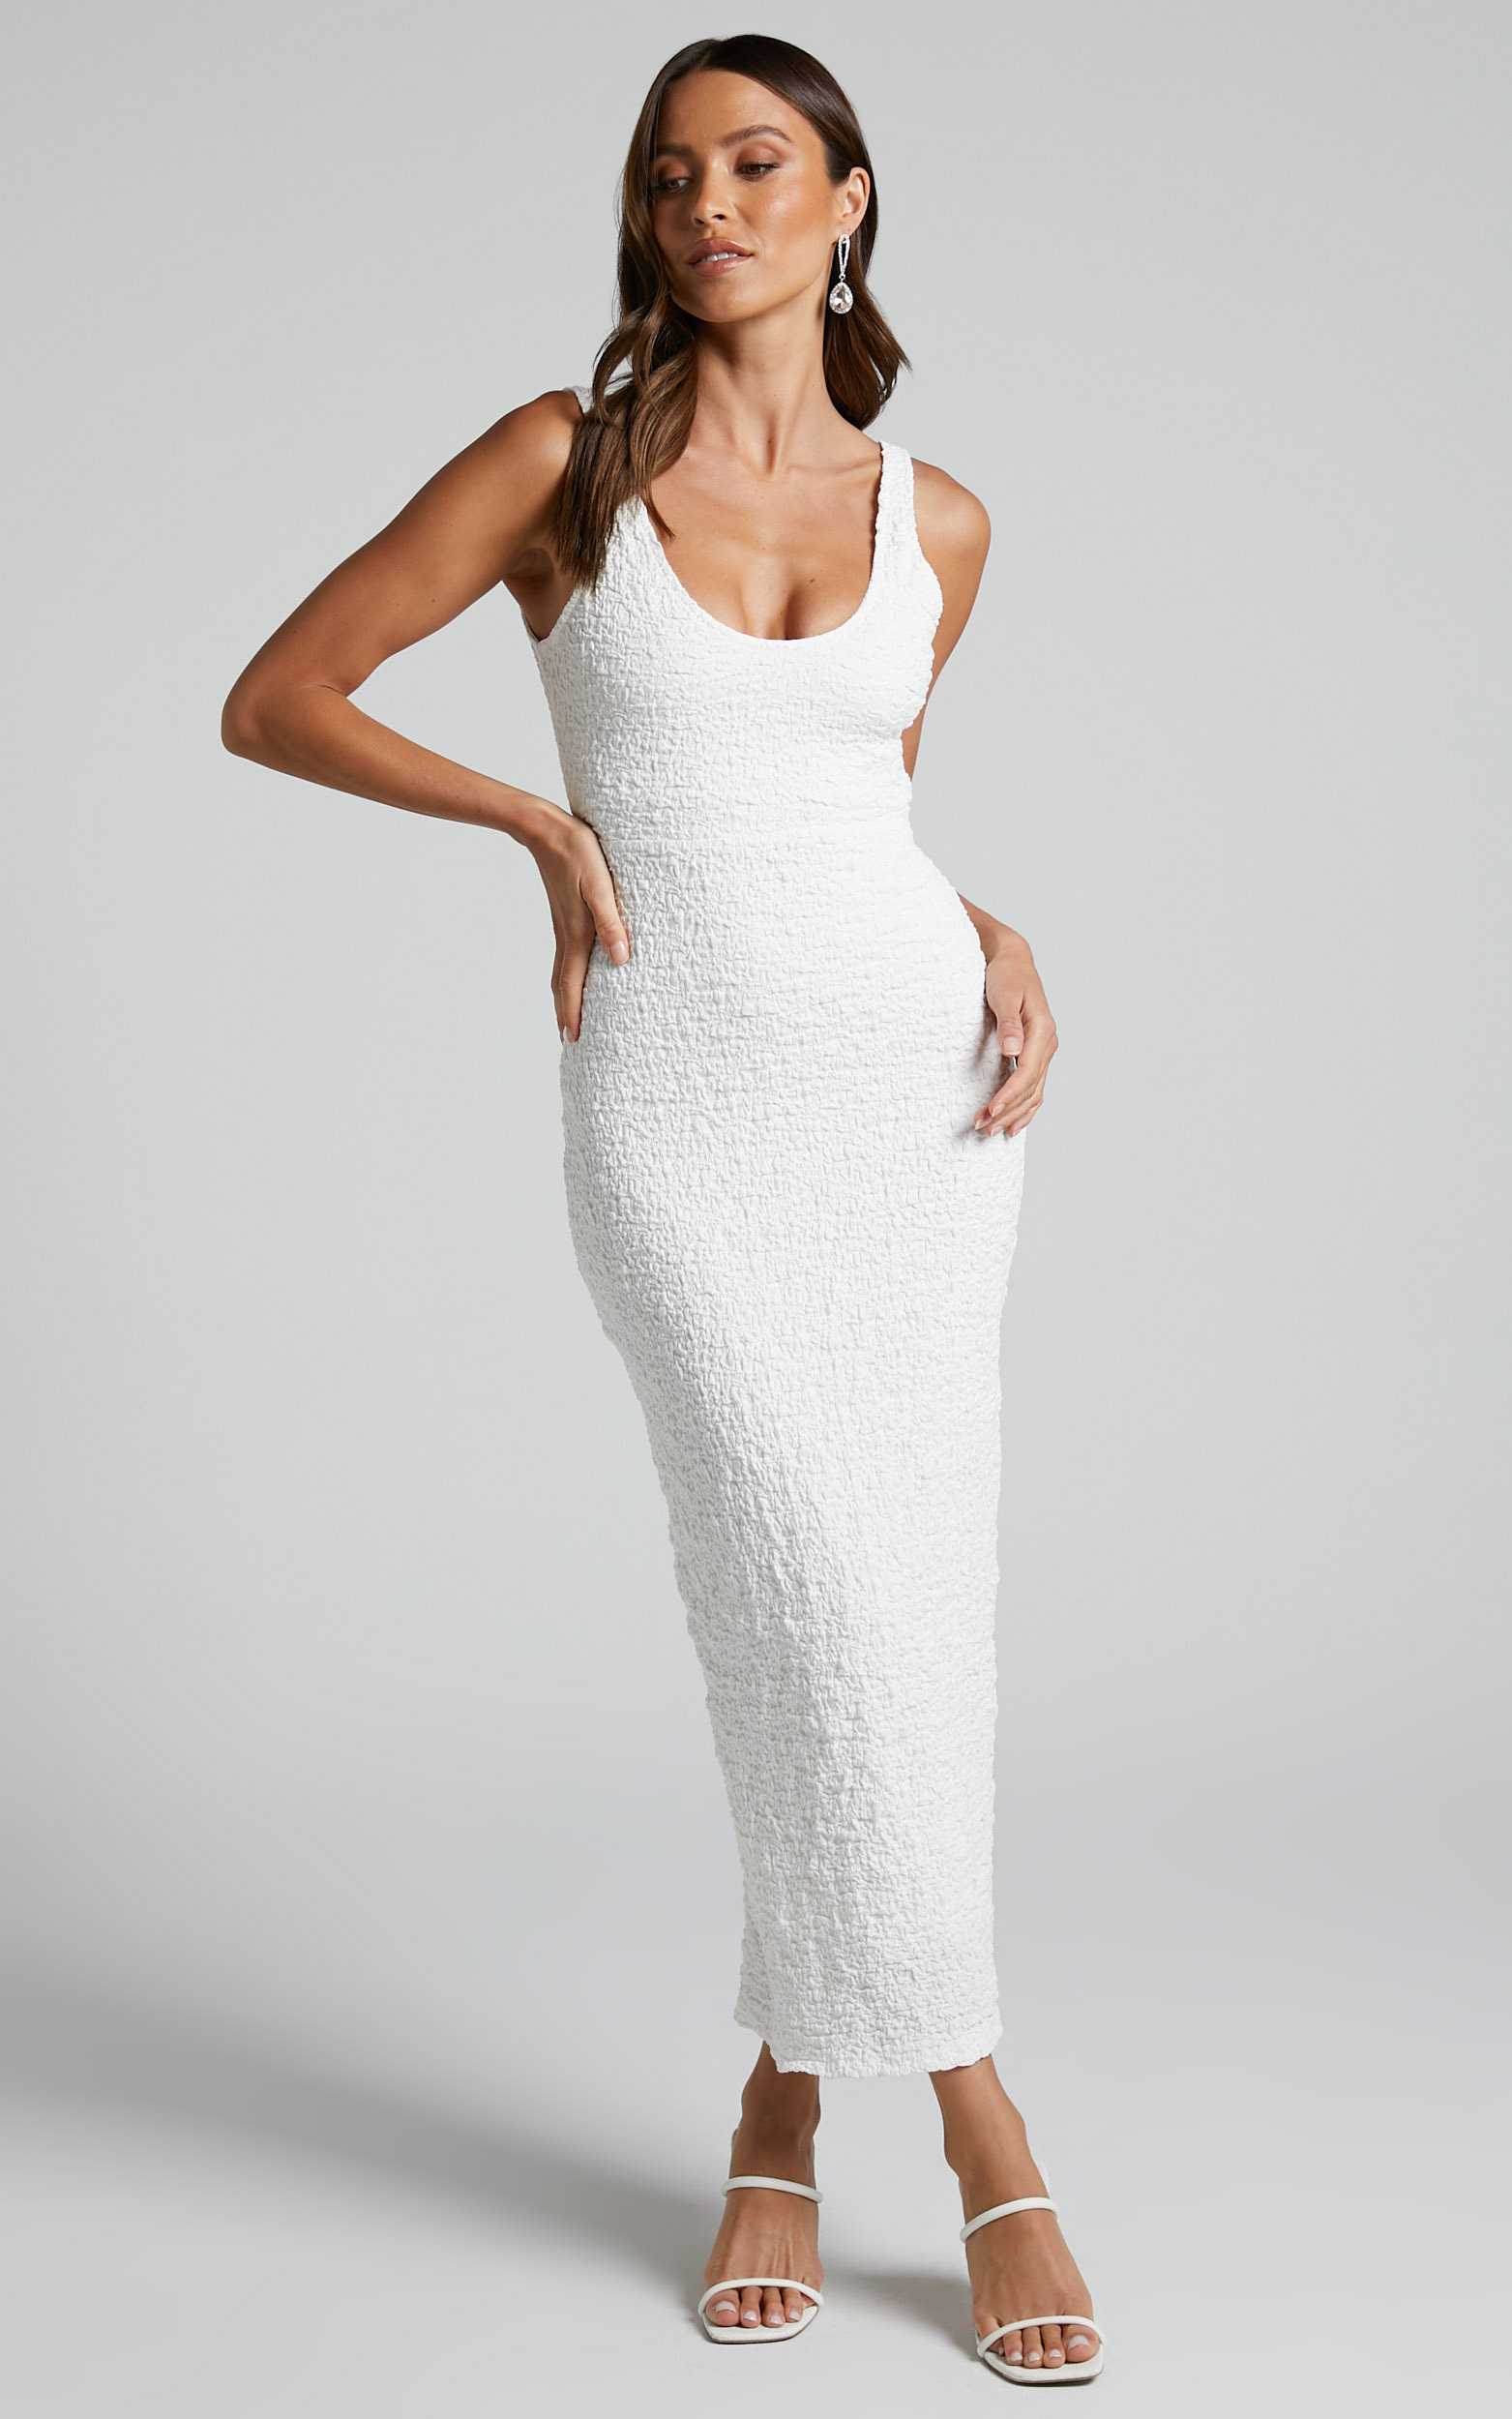 Novida Dress - Textured Bodycon Dress in White |